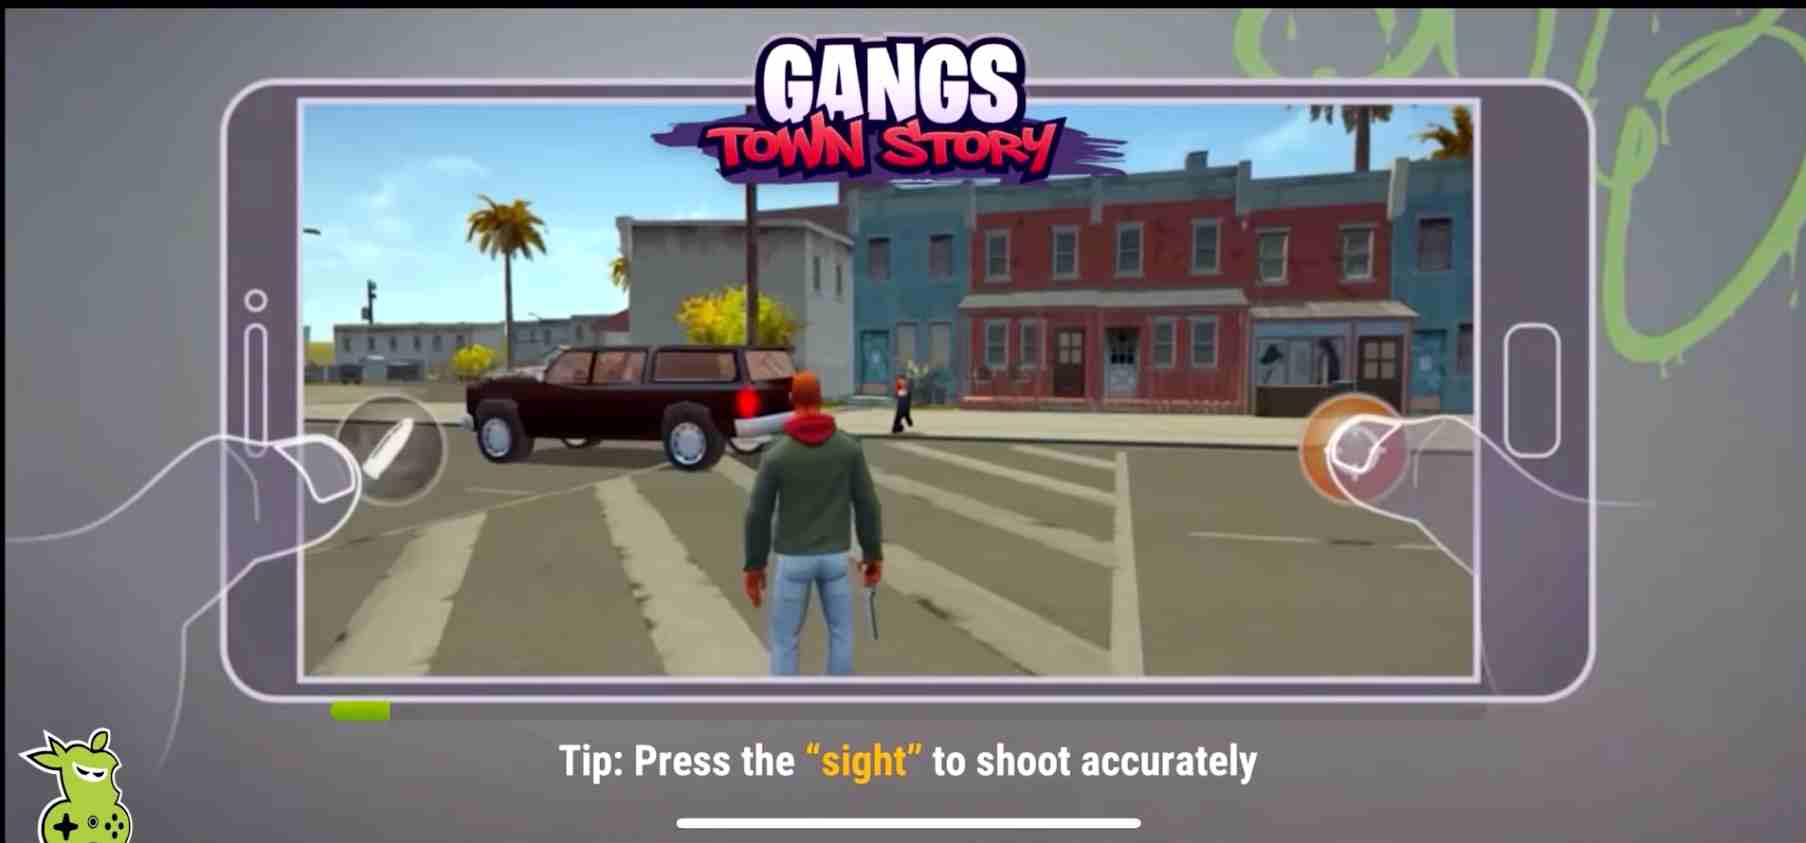 Gangs Town Story mod apk